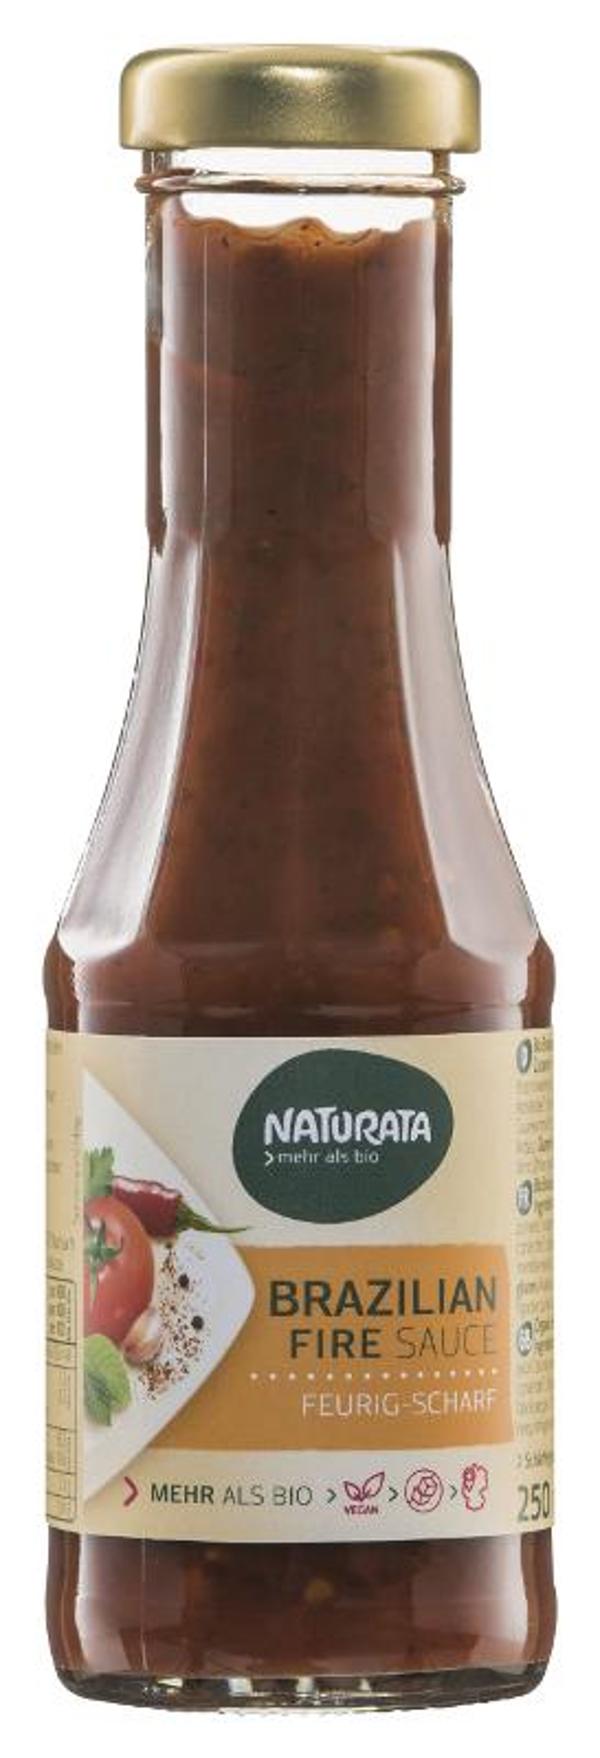 Produktfoto zu Naturata Brazilian Fire Sauce - 250ml